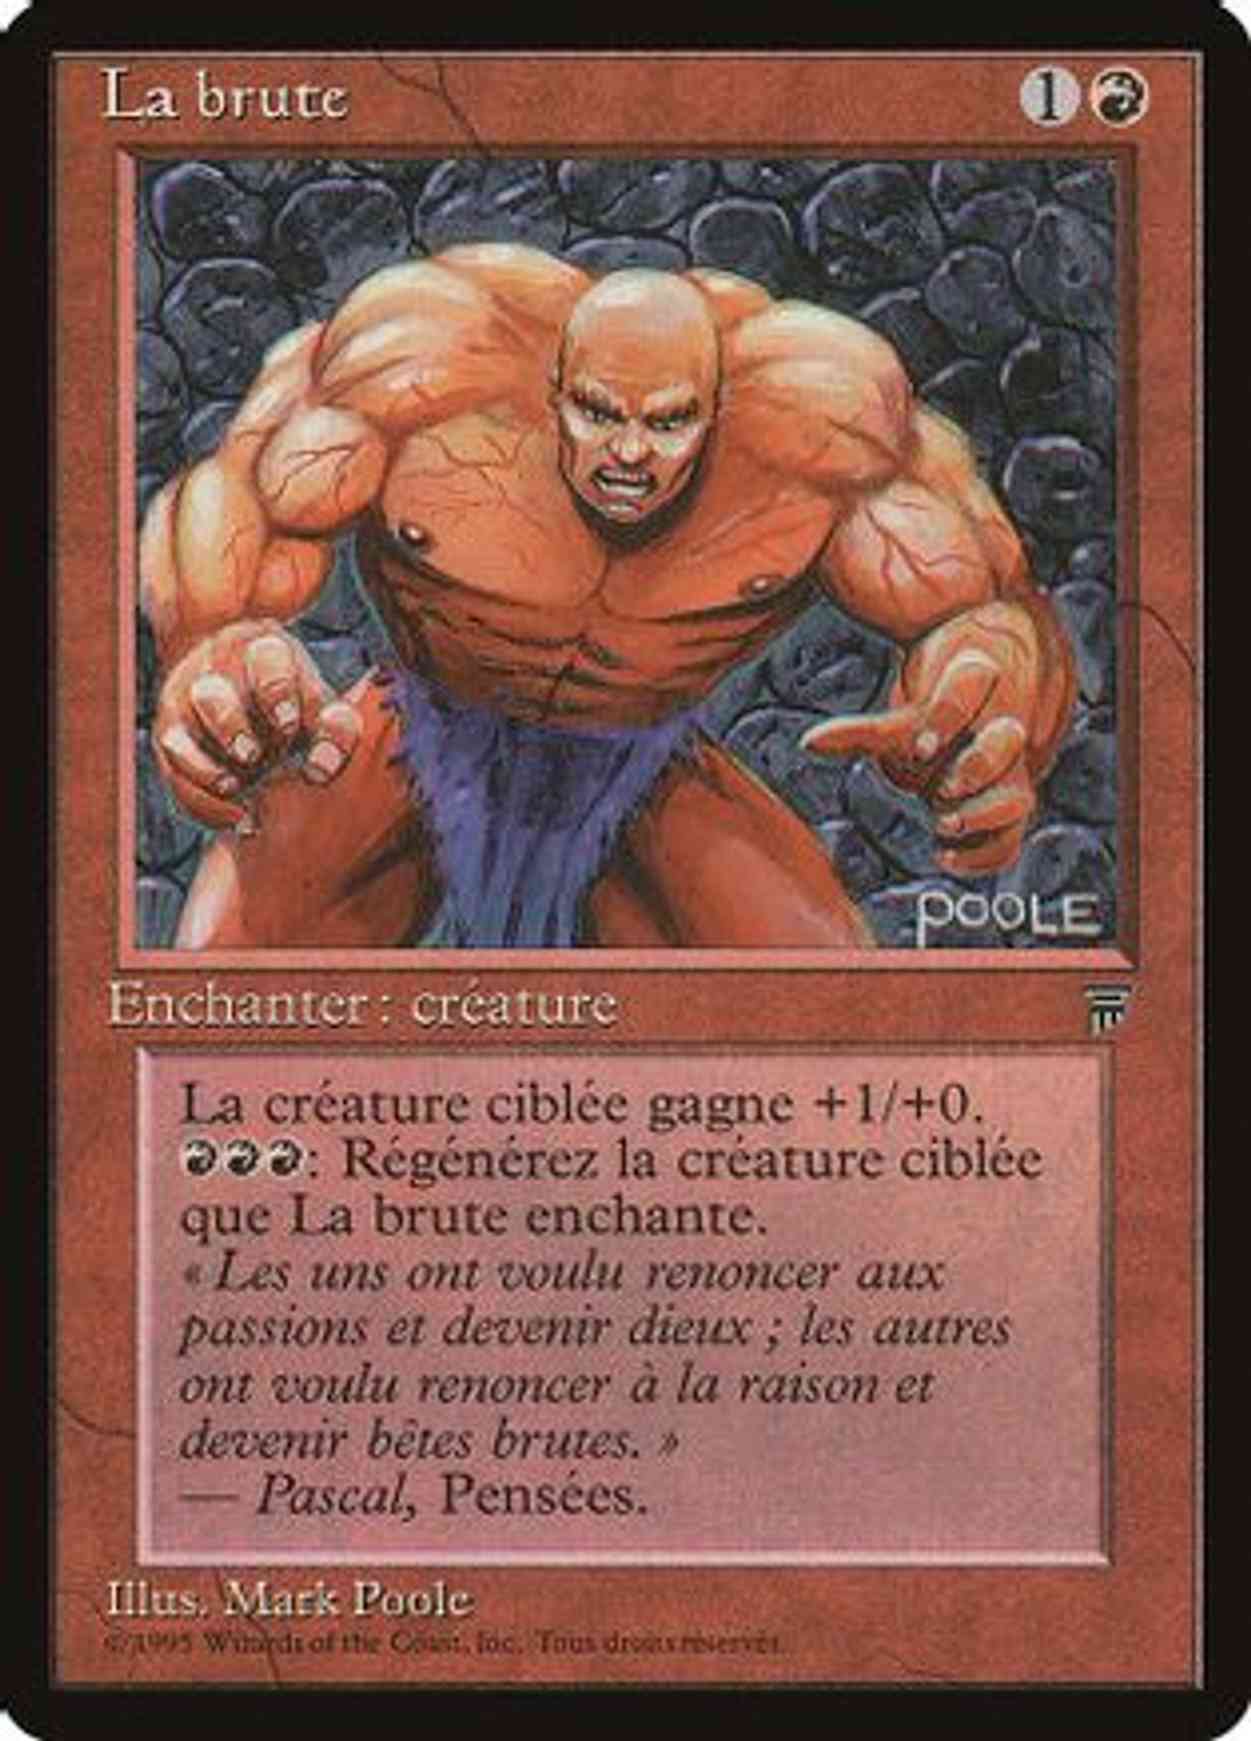 The Brute (French) - "La Brute" magic card front